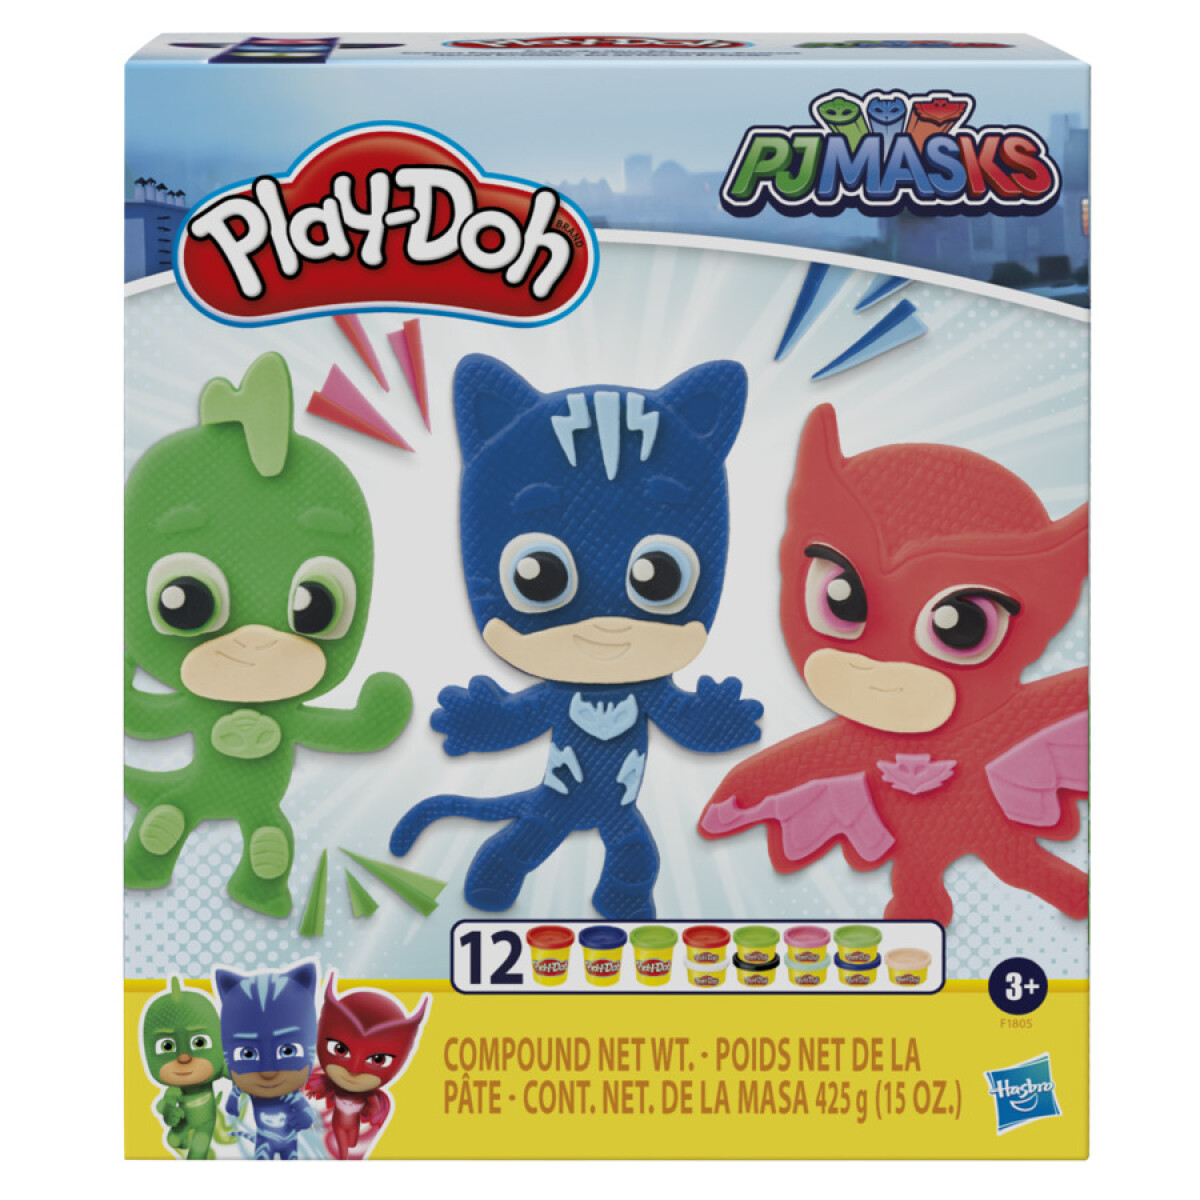 Set Masas Play-doh Kit de Heroes Pj Masks - 001 